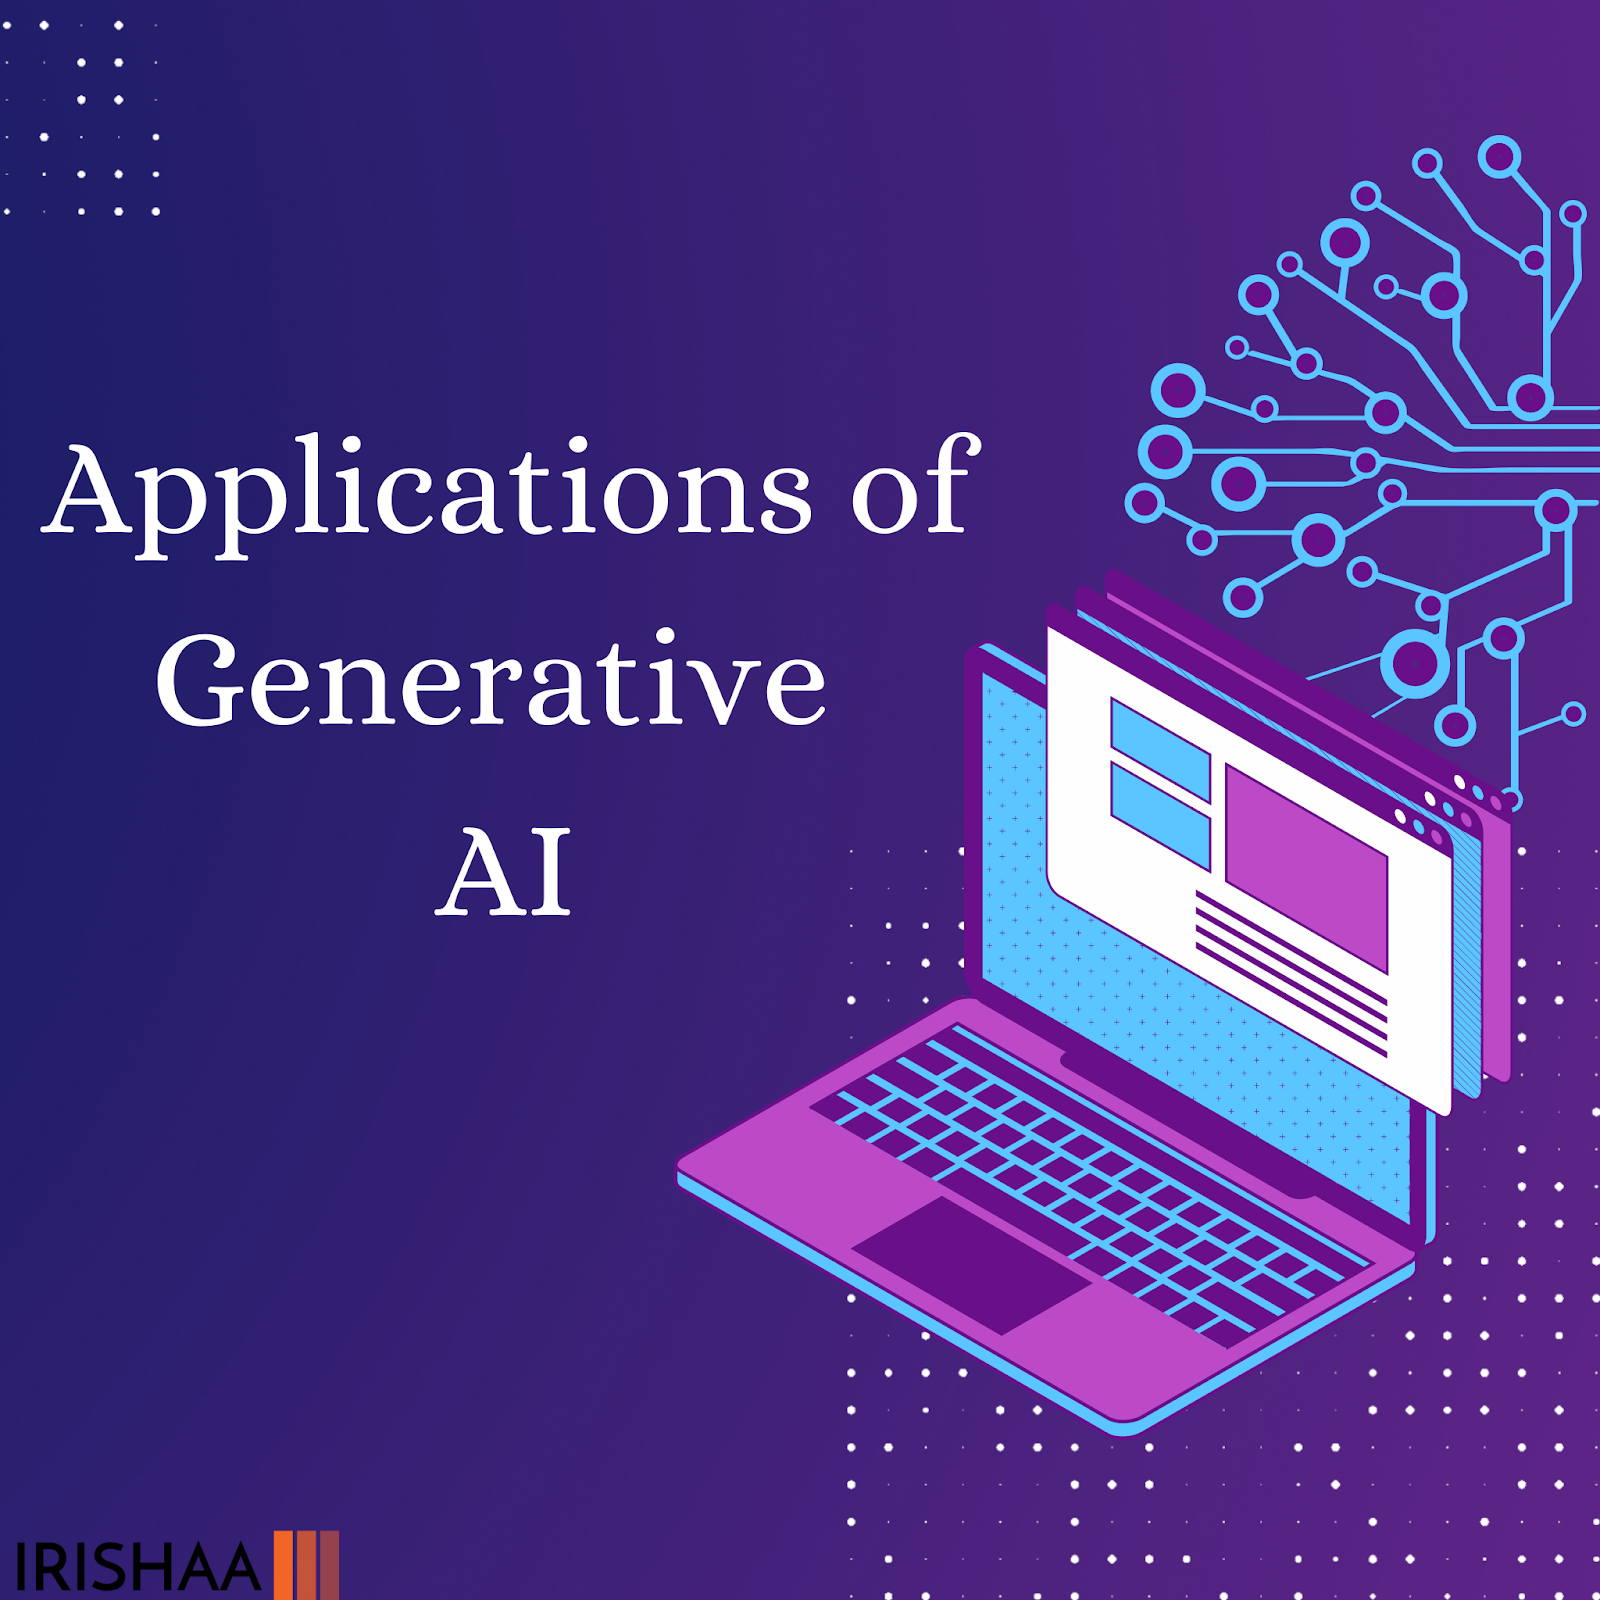 Applications of Generative AI
